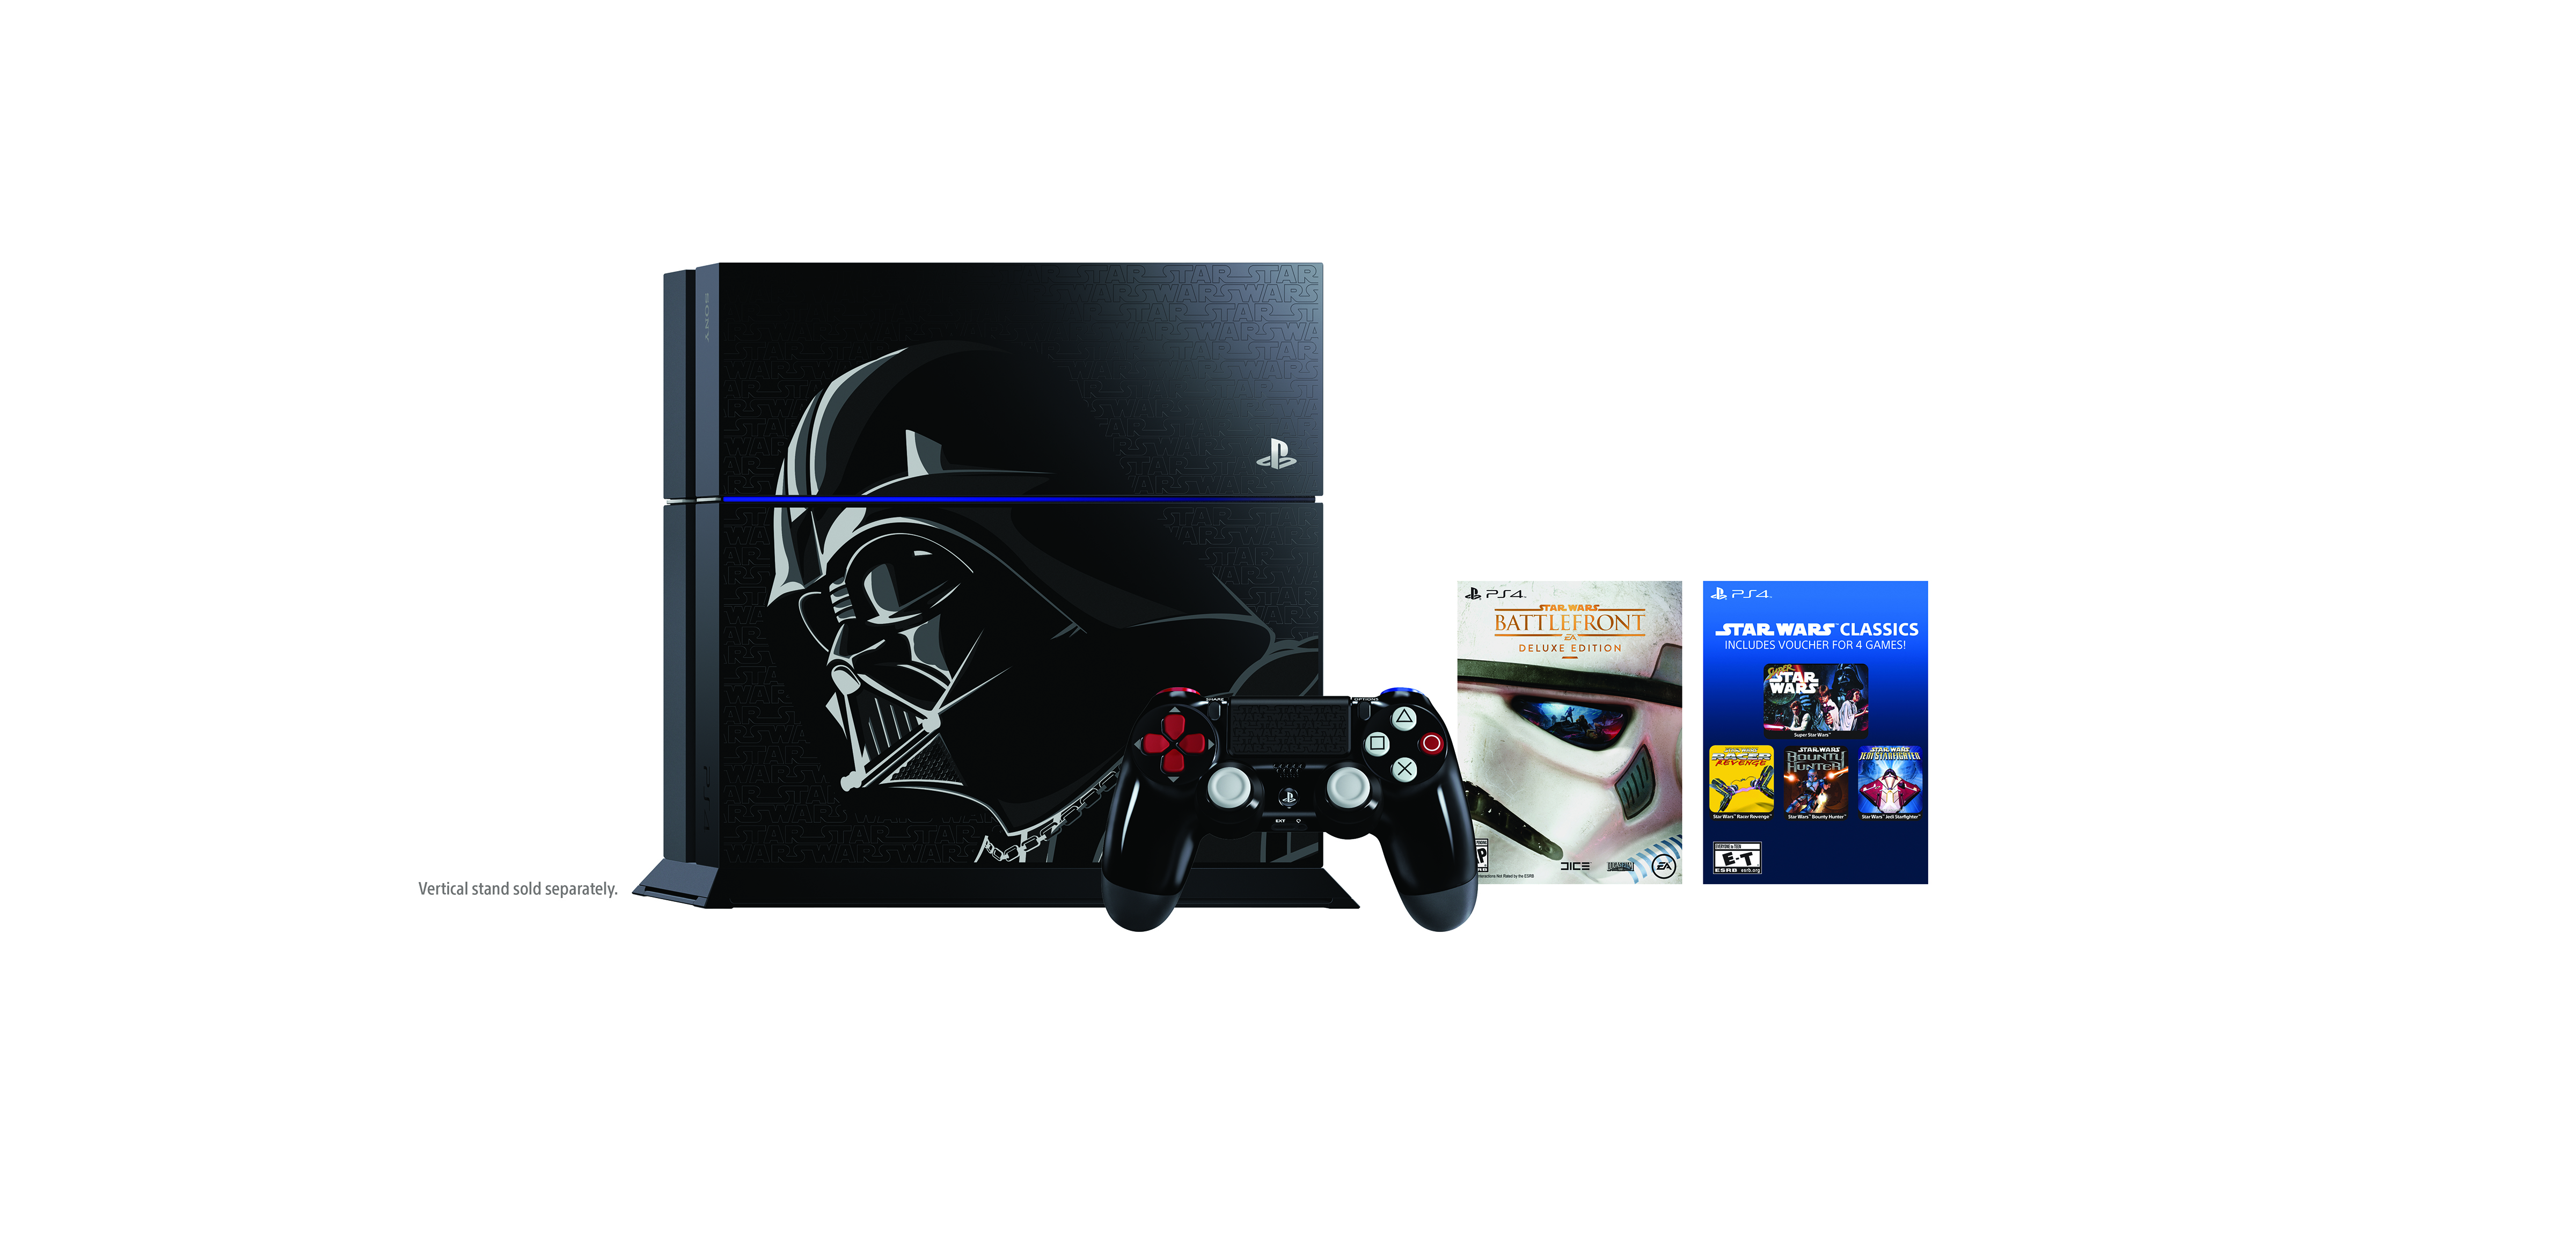 Star Wars Limited Edition PlayStation 4